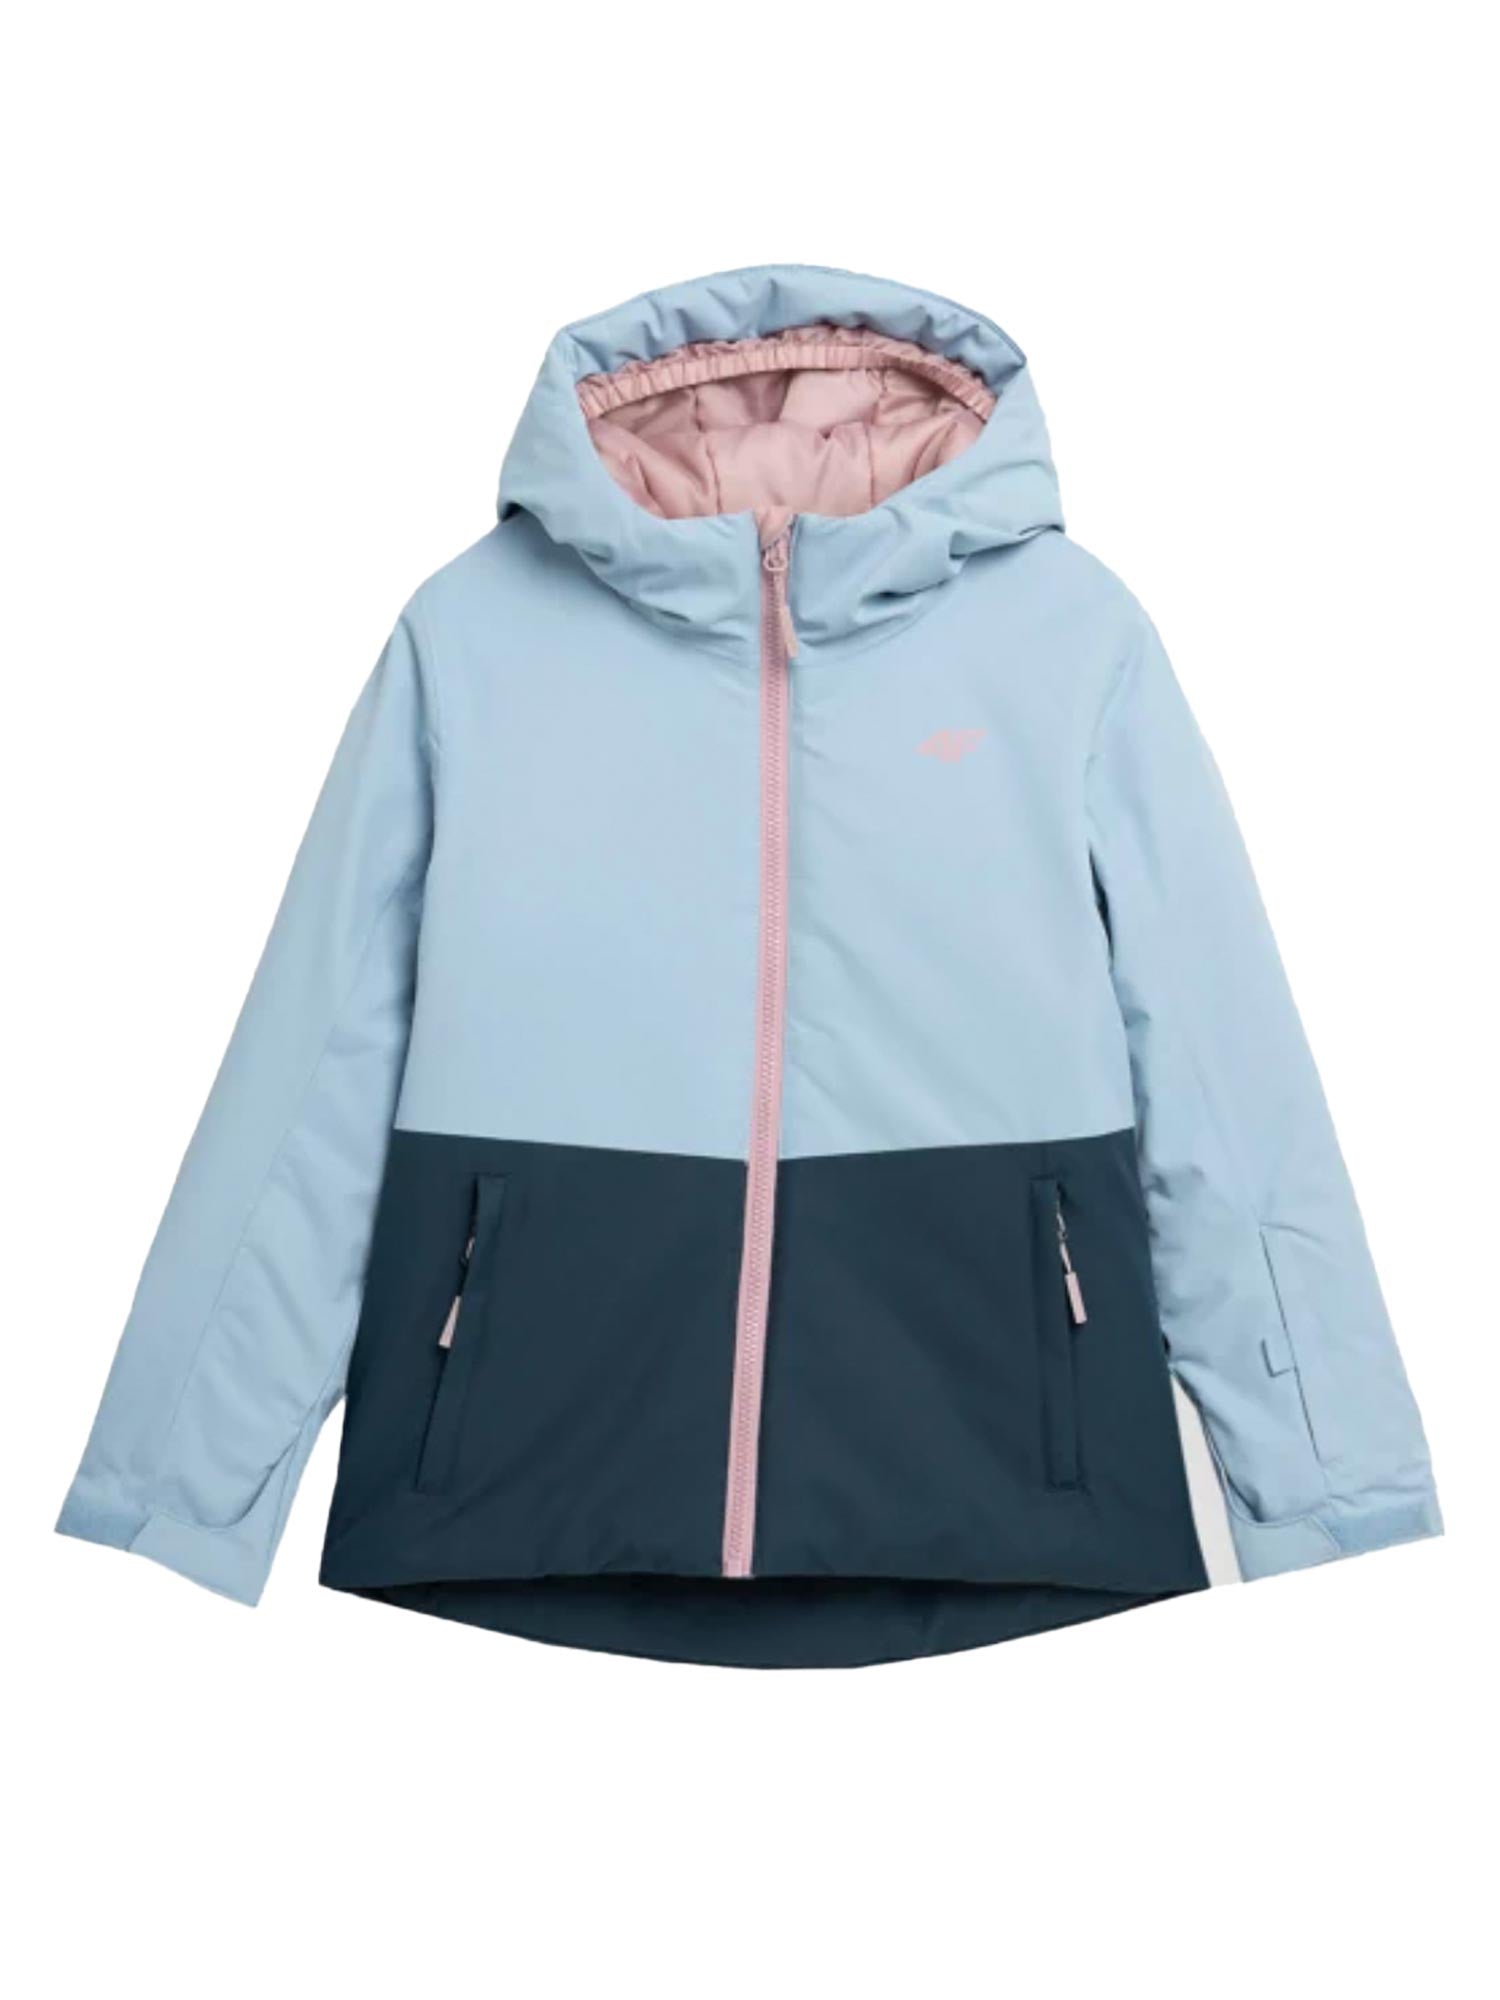 Girls' ski jacket, light blue navy blue pink accents